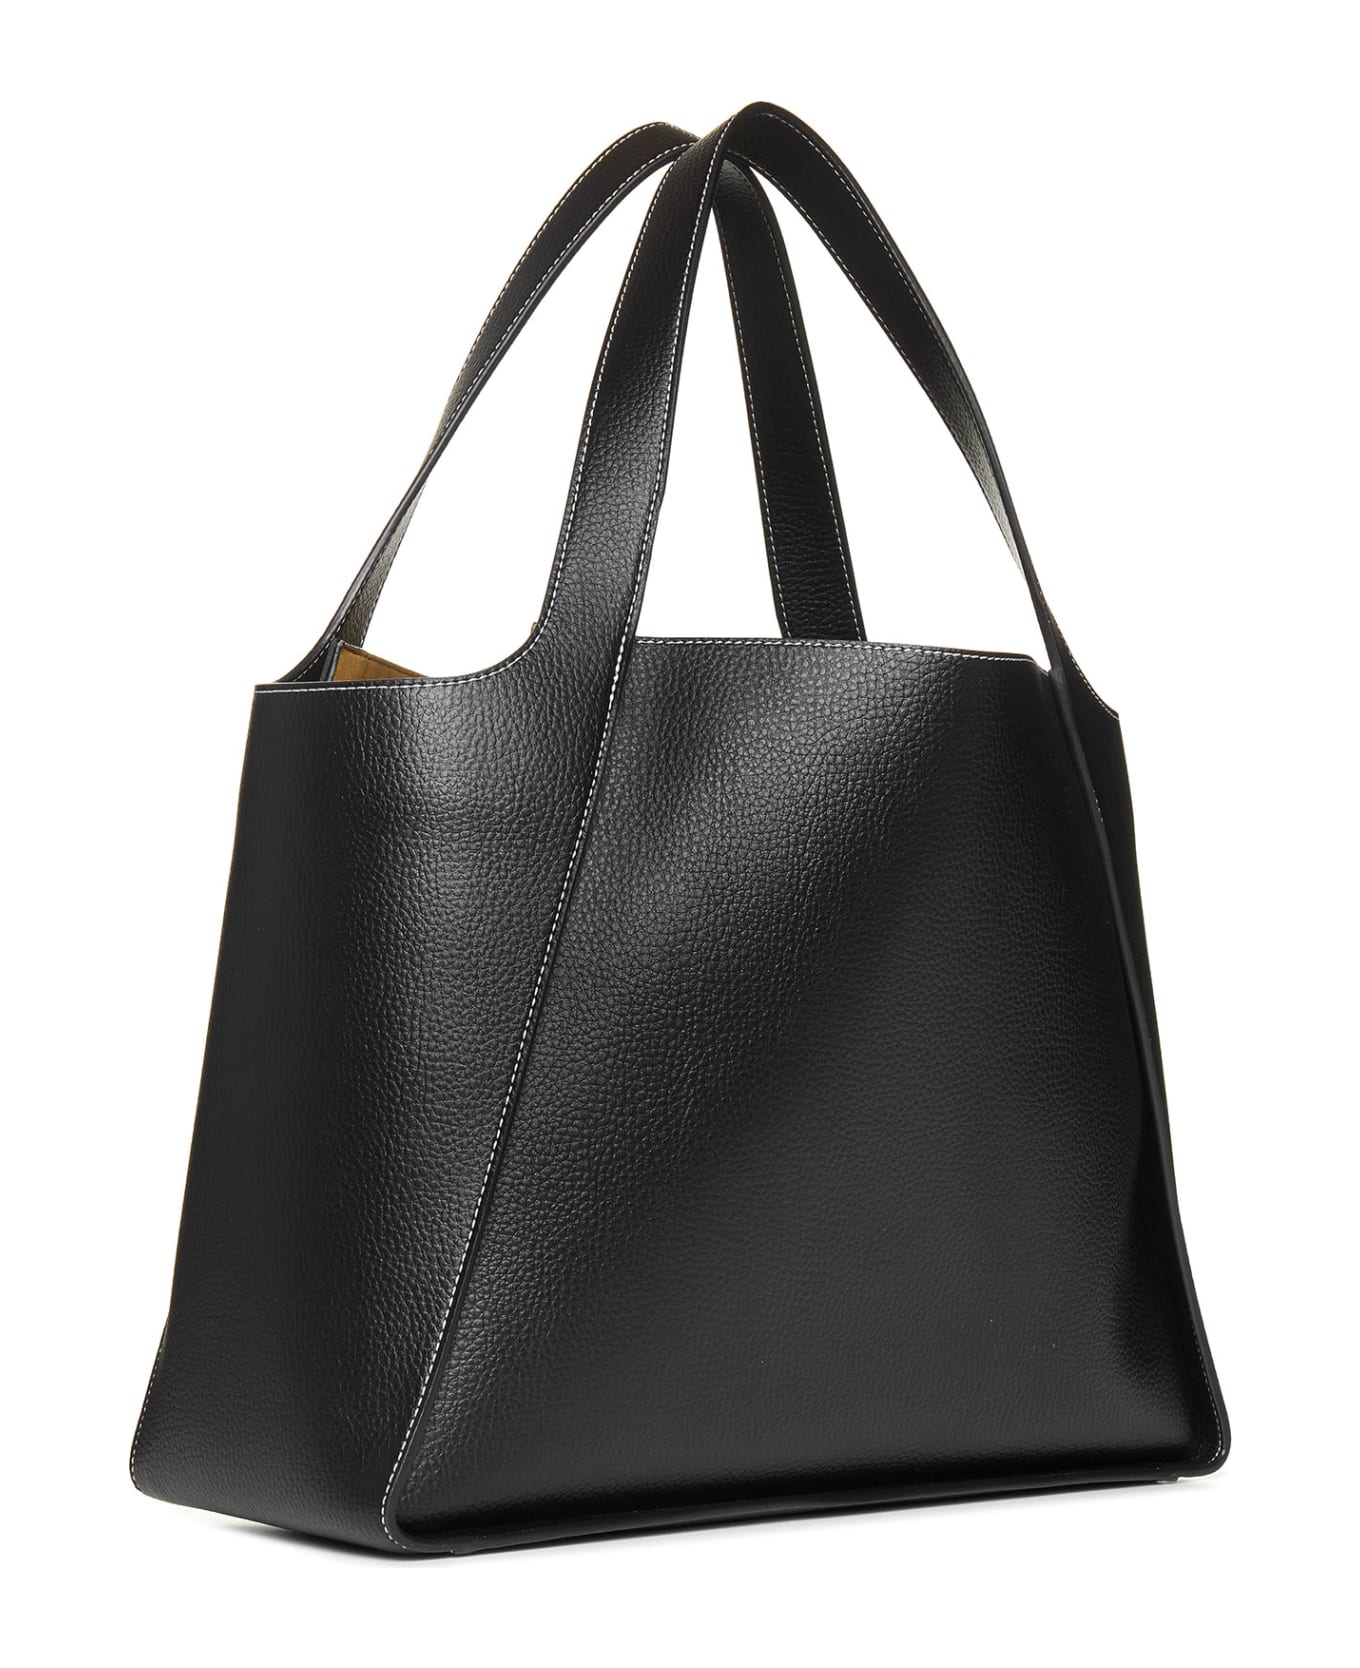 Stella McCartney Tote Bag With Logo - Black